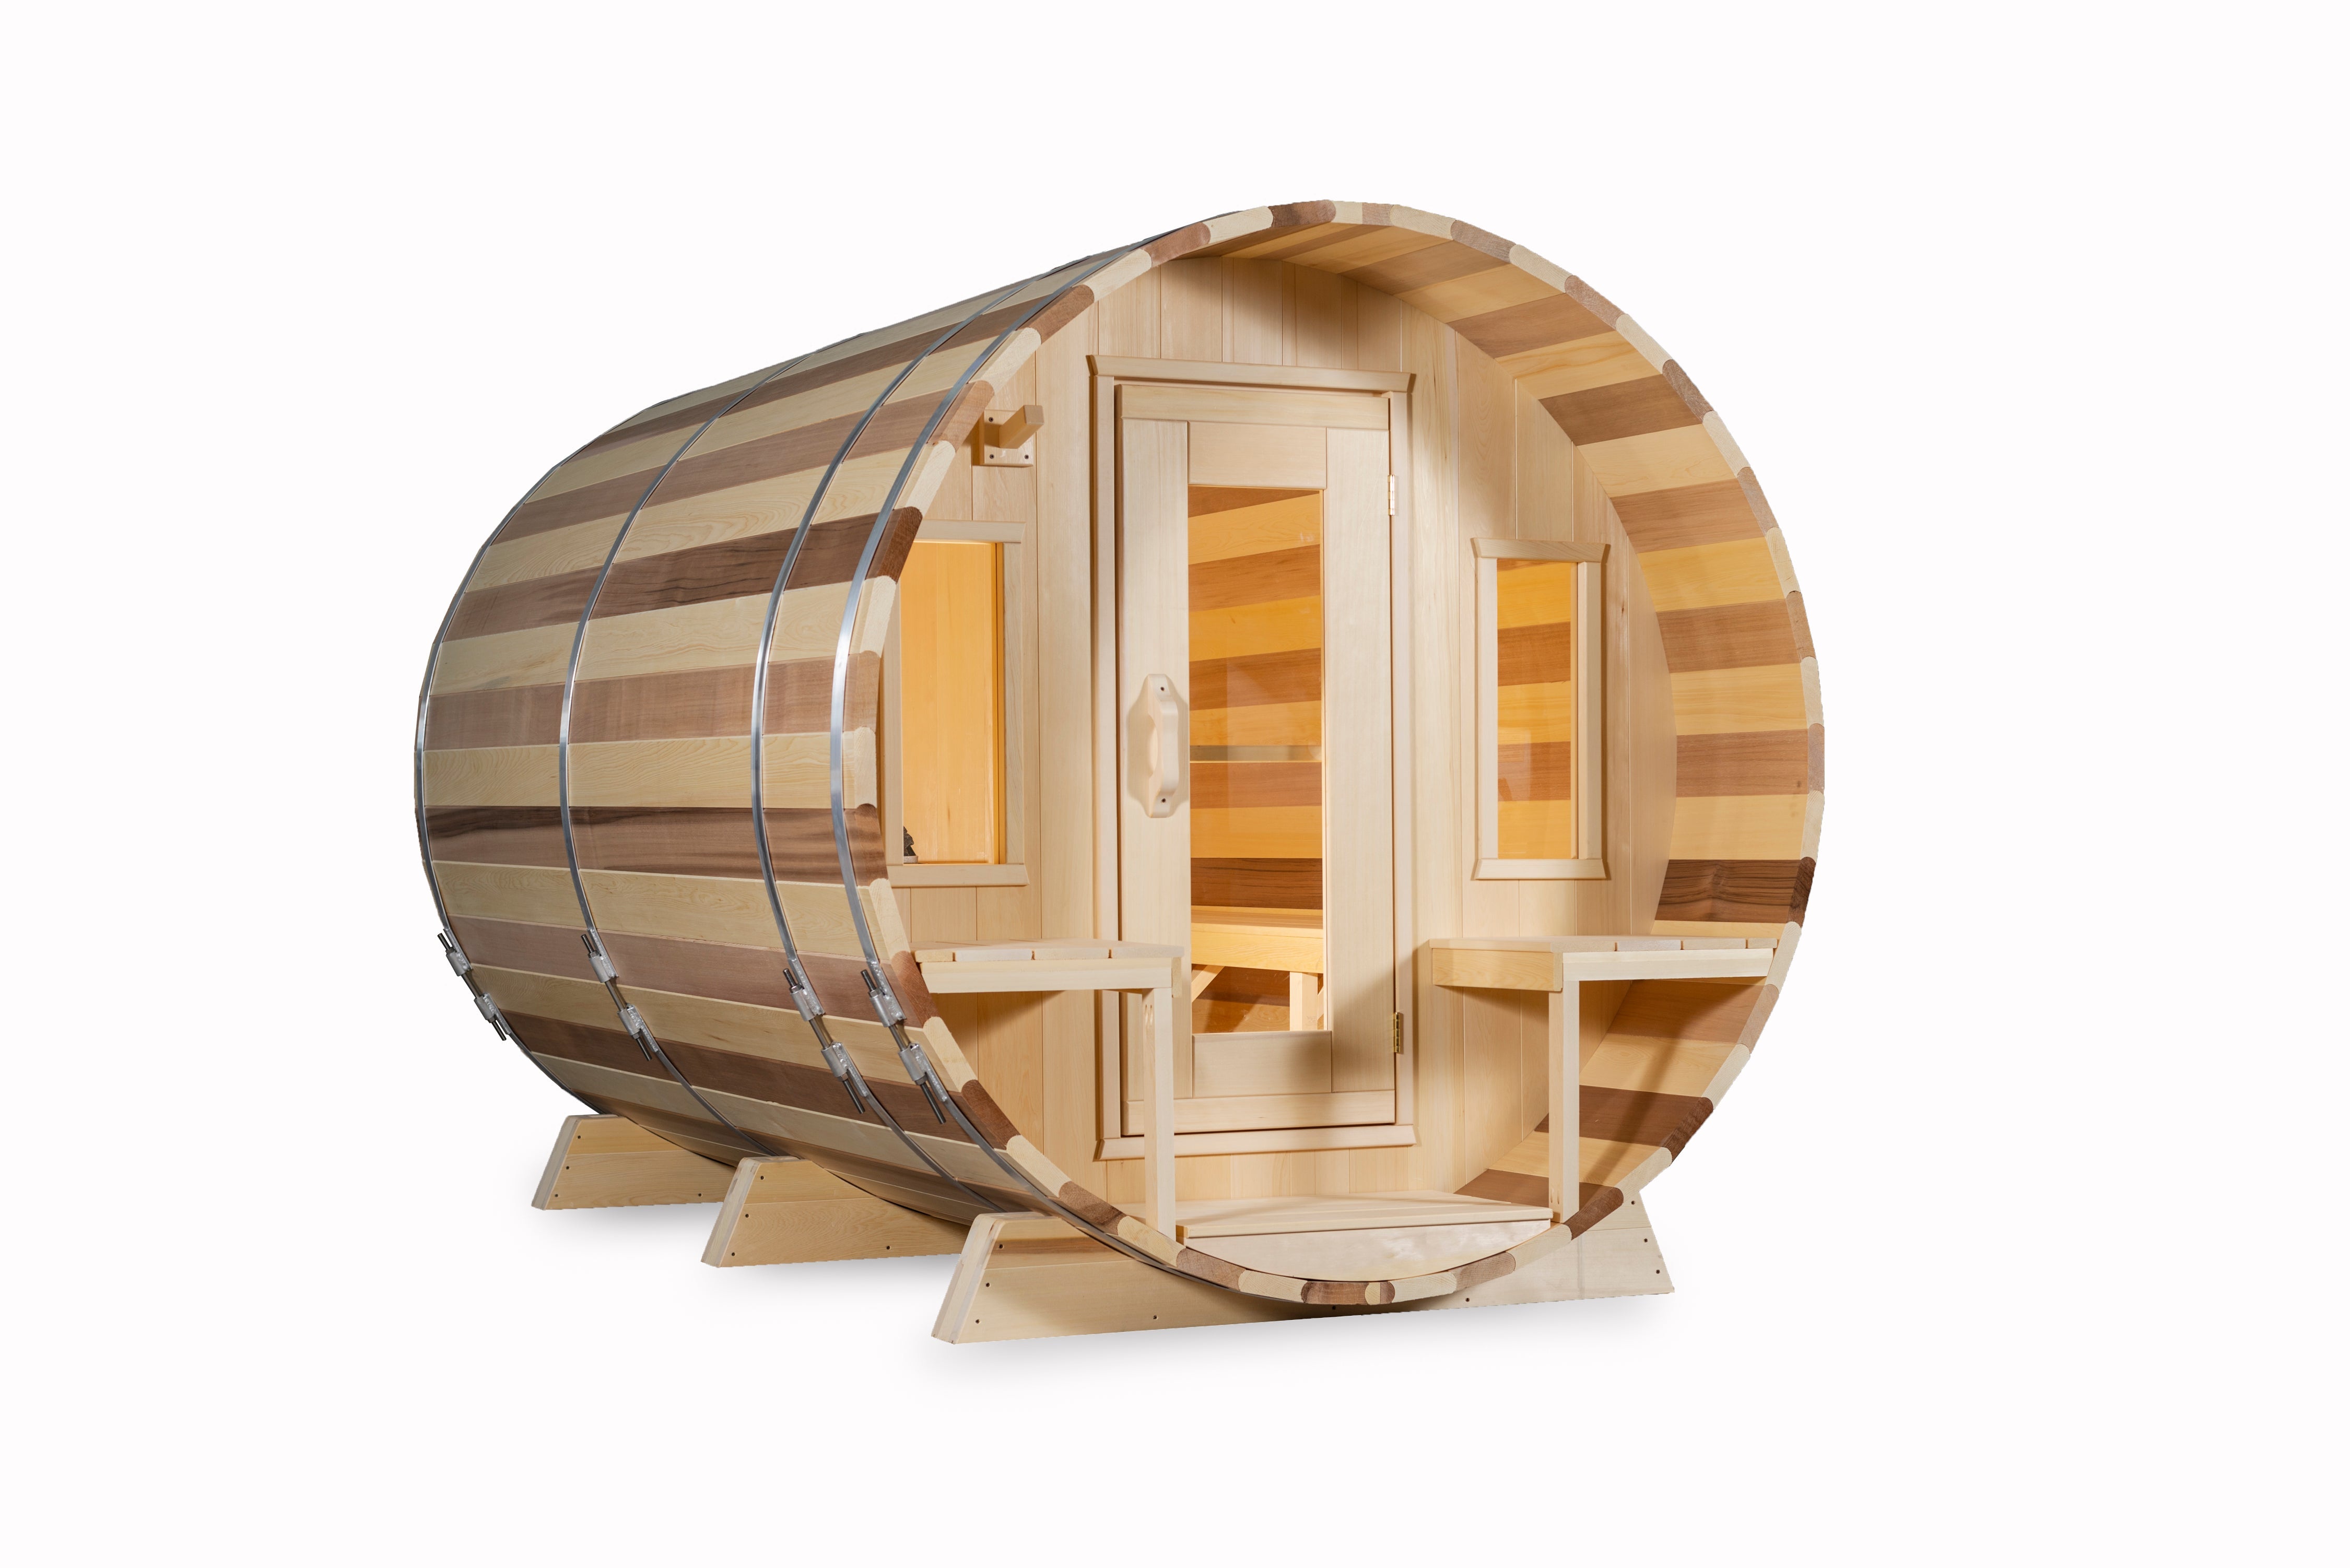 Tranquility Sauna | Canadian Timber Collection | Outdoor Home Sauna Kit